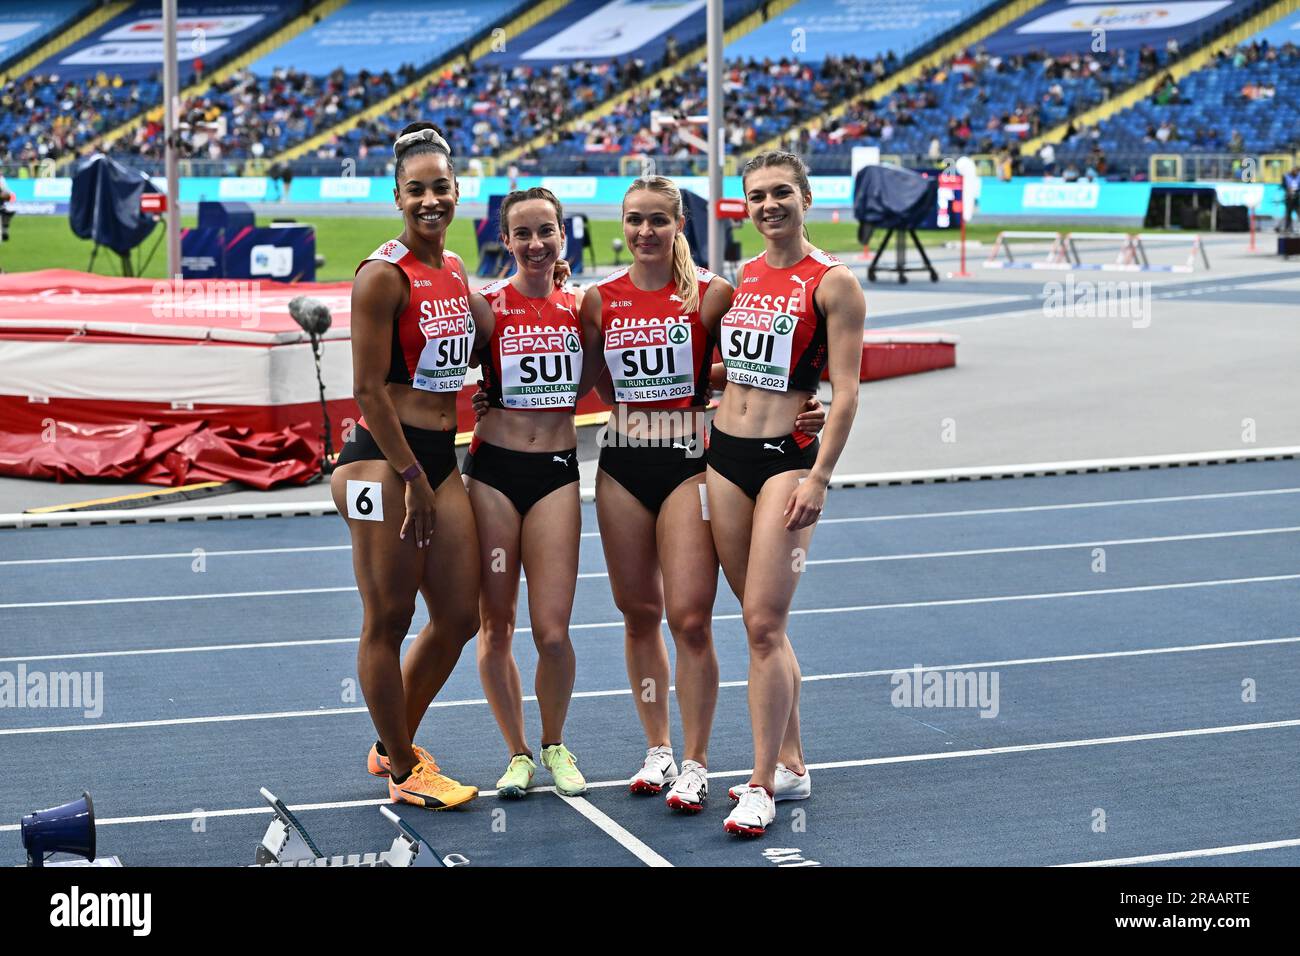 CHORZOW, POLAND - JUNE 24: Lena Weiss, Salome Kora, Geraldine Frey, Celine Burgi of Swizerland pose for a photo after win’s in the Women's 4 x 100m Re Stock Photo